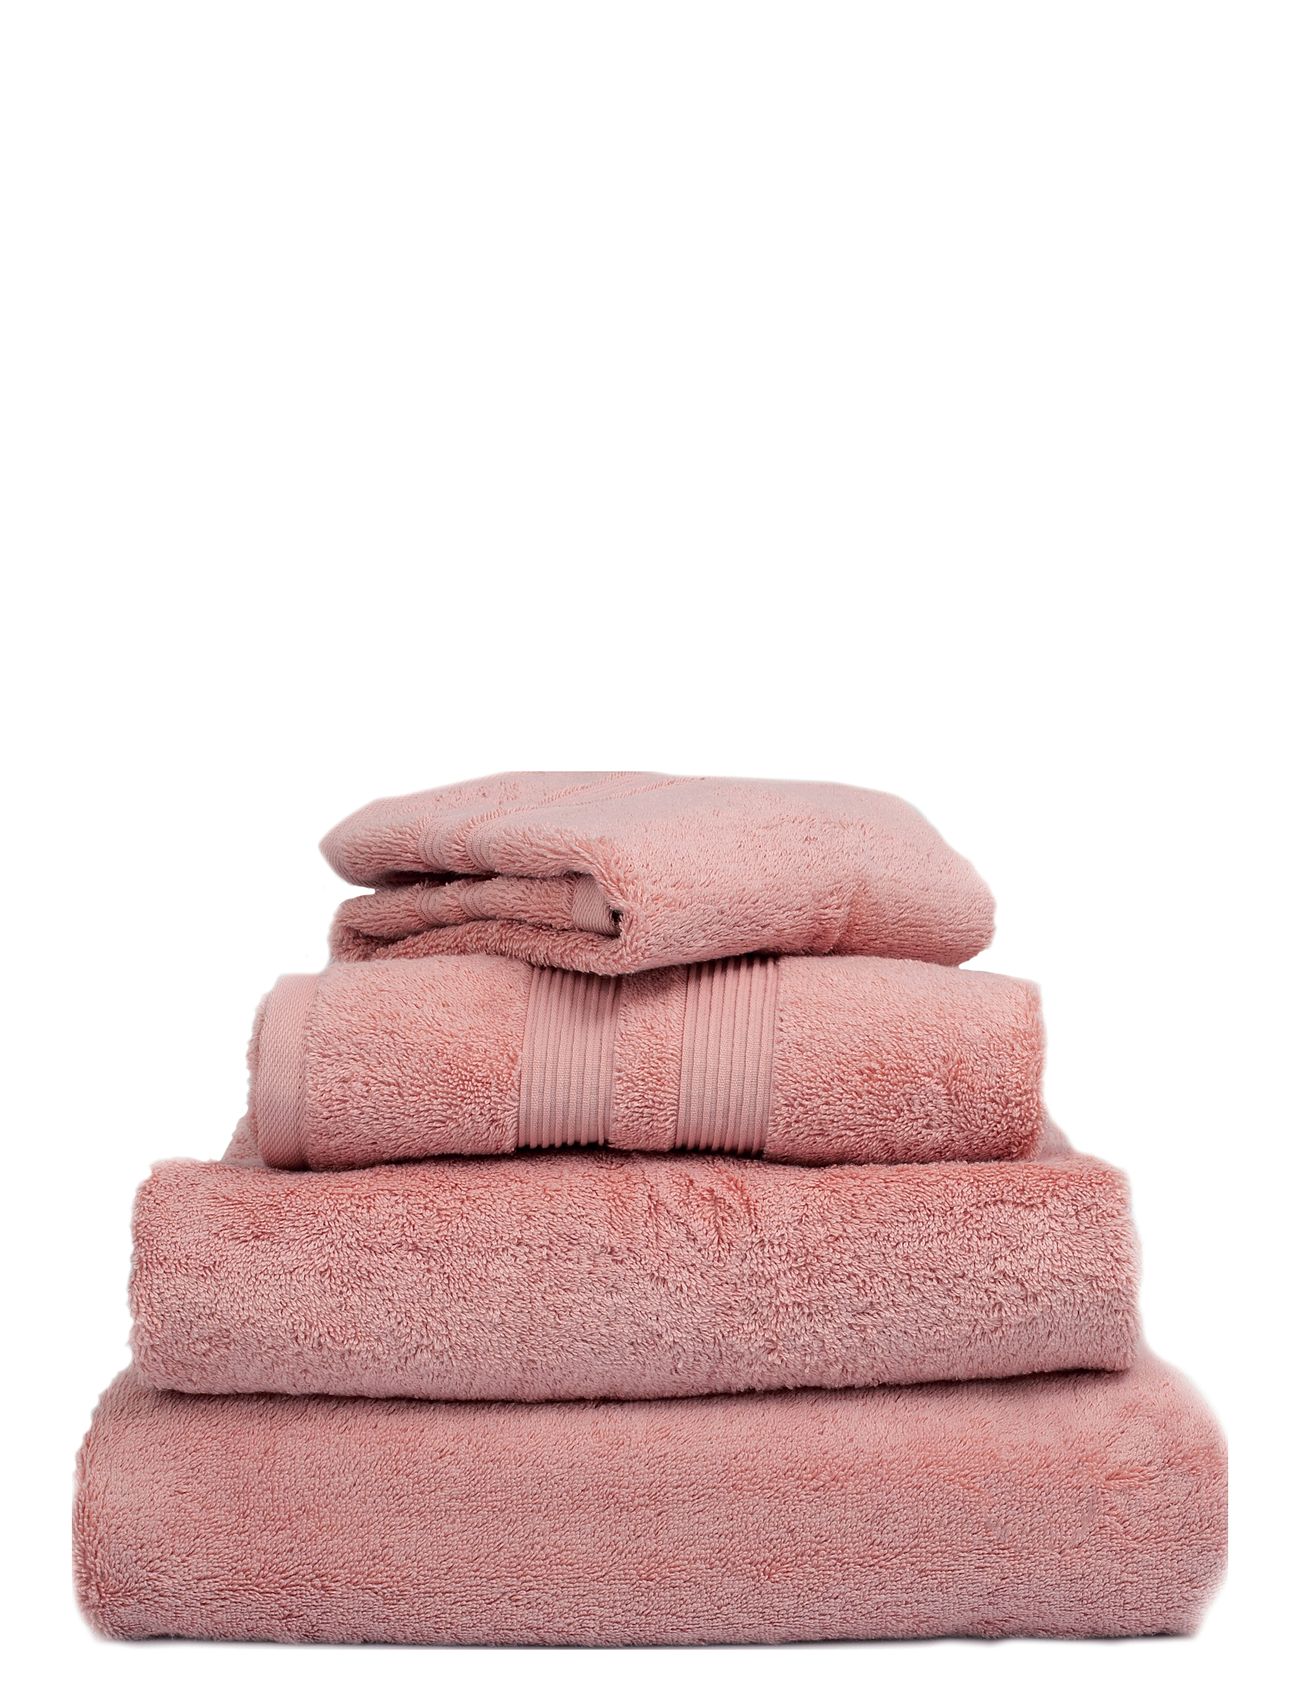 Fontana Towel Organic Home Textiles Bathroom Textiles Towels Pink Mille Notti